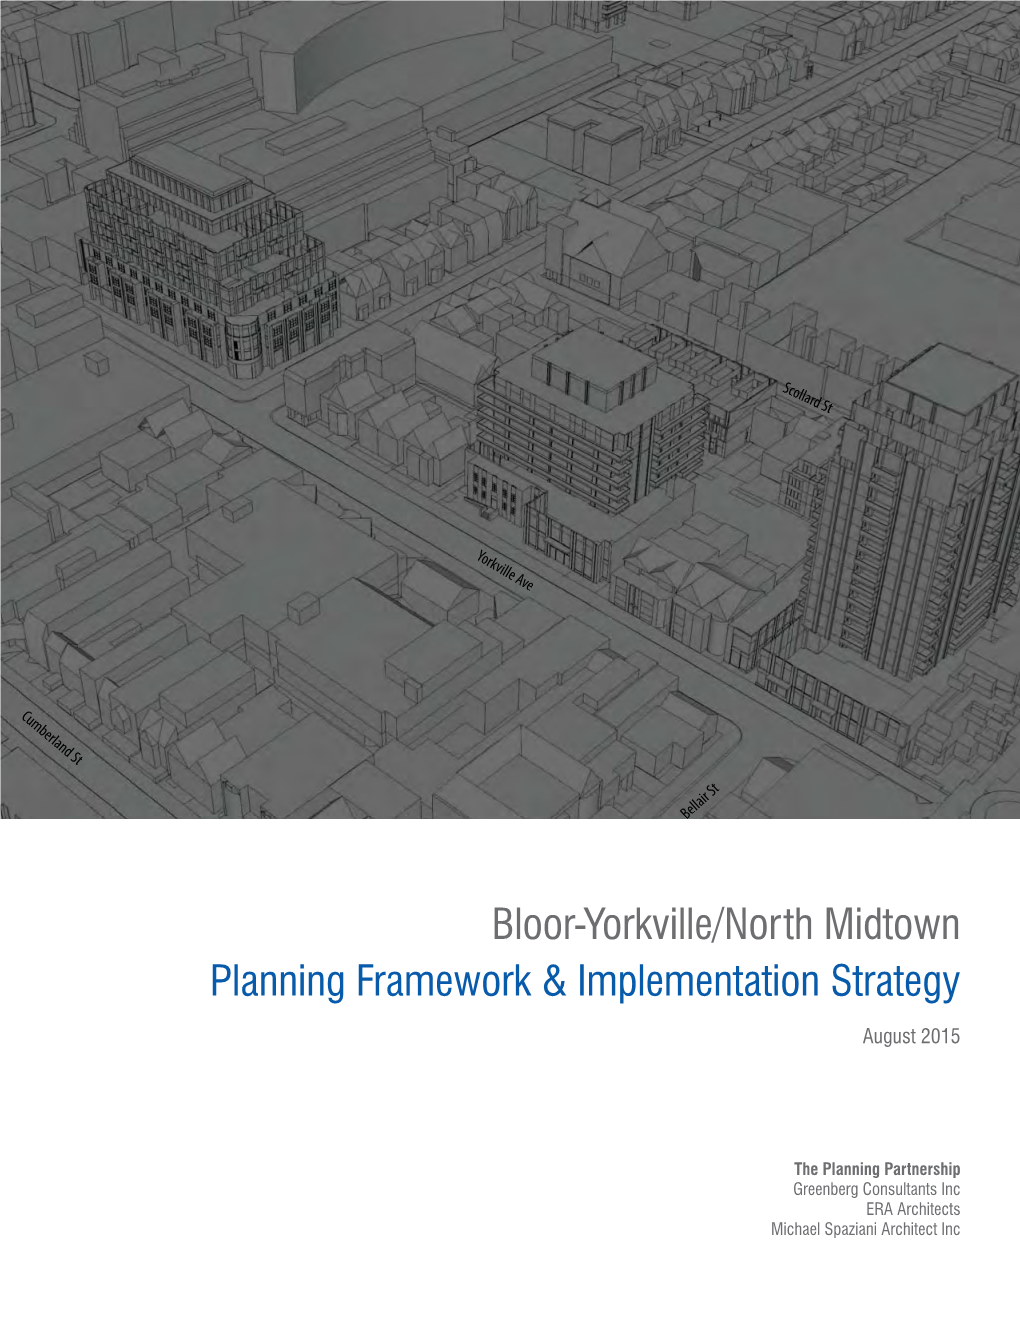 Bloor-Yorkville/North Midtown Planning Framework & Implementation Strategy